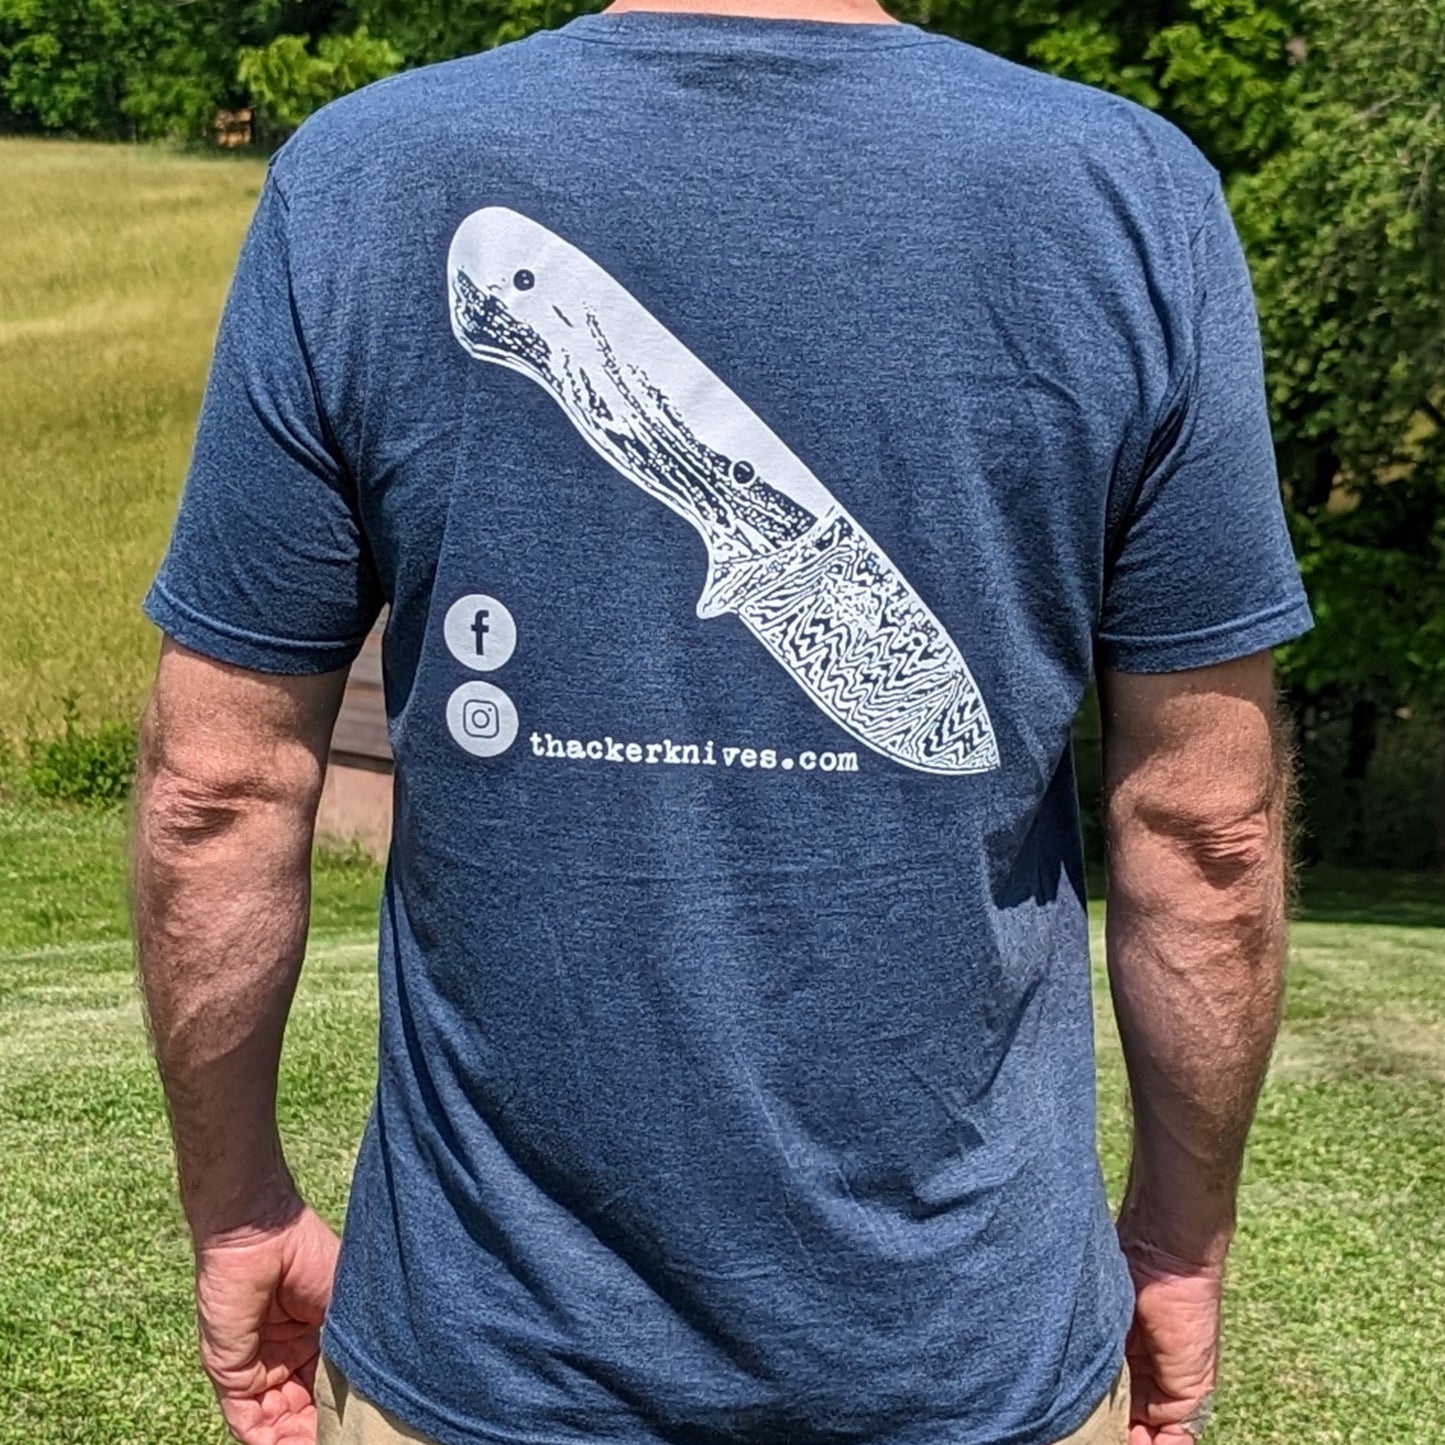 Thacker Knives T-Shirt (Navy)